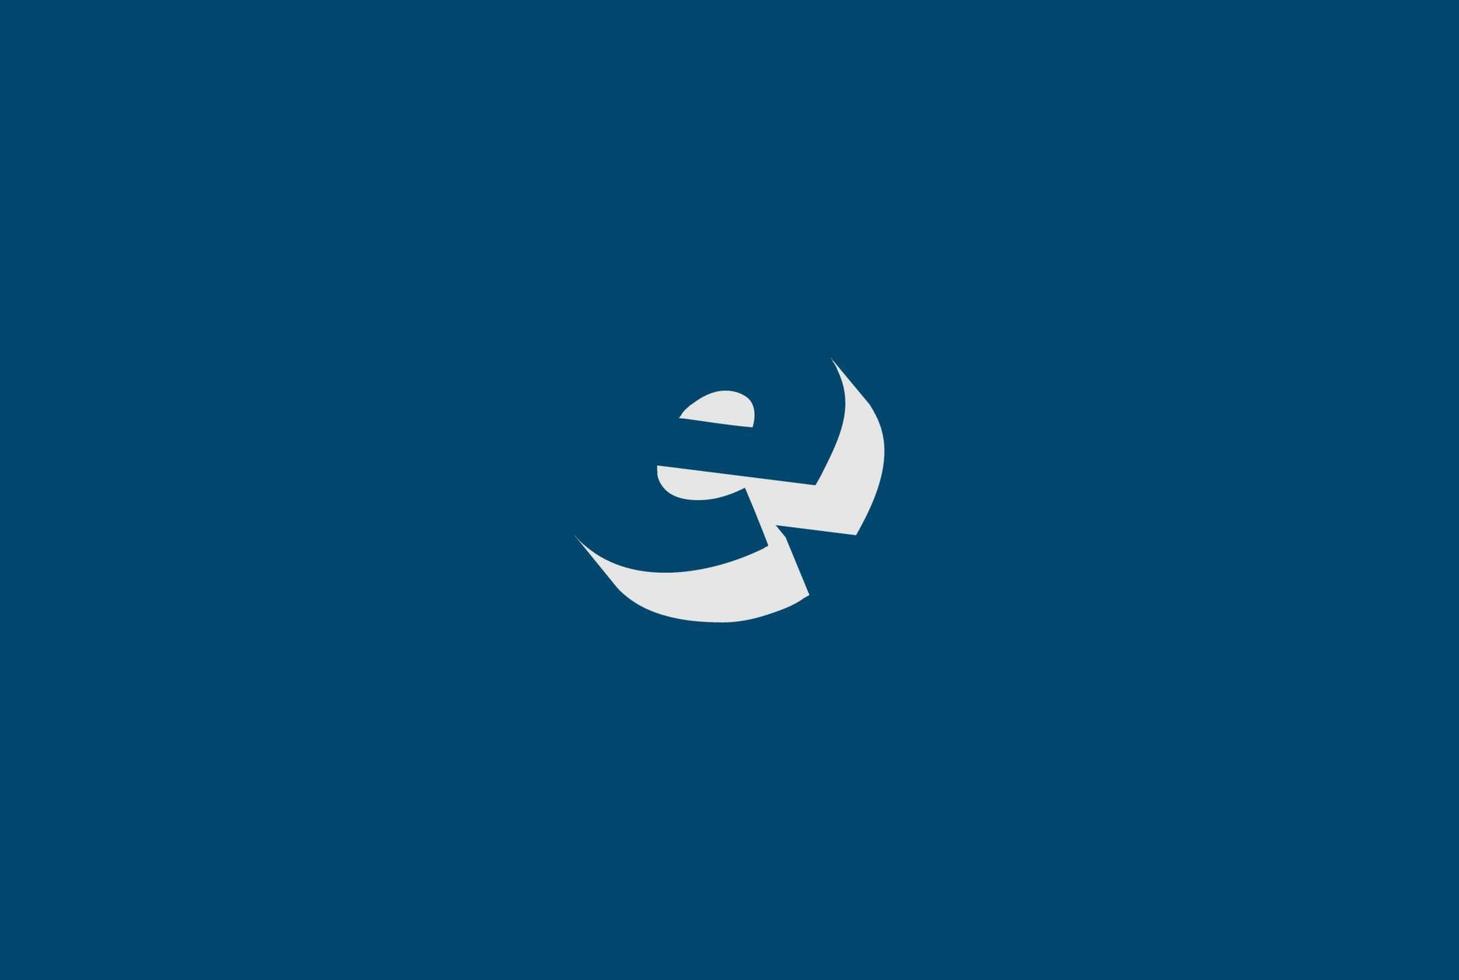 vector de diseño de logotipo de letra e inicial minimalista moderno simple